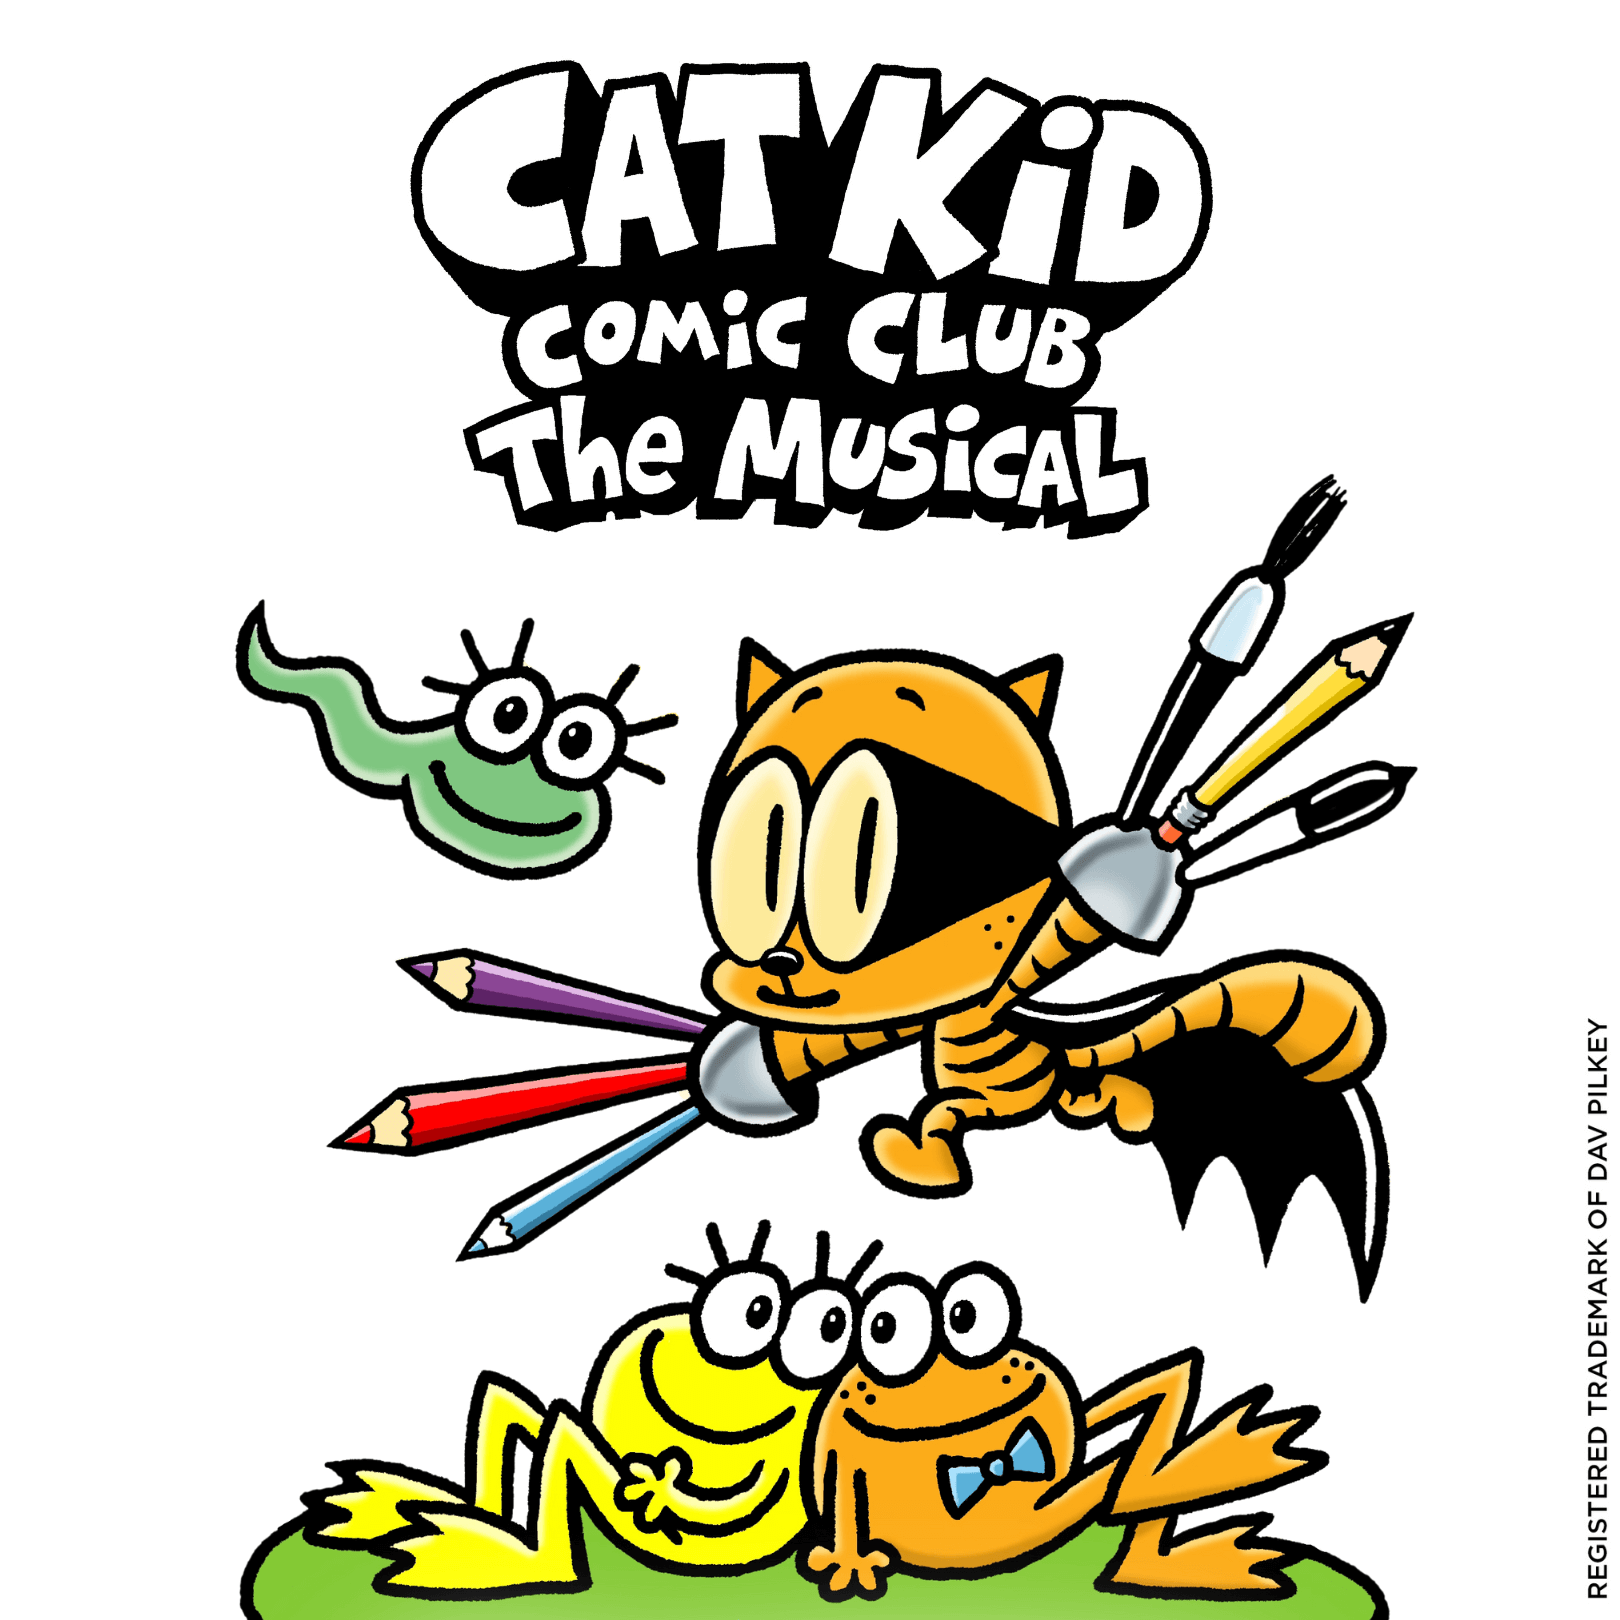 Cat Kid Comic Club The Musical